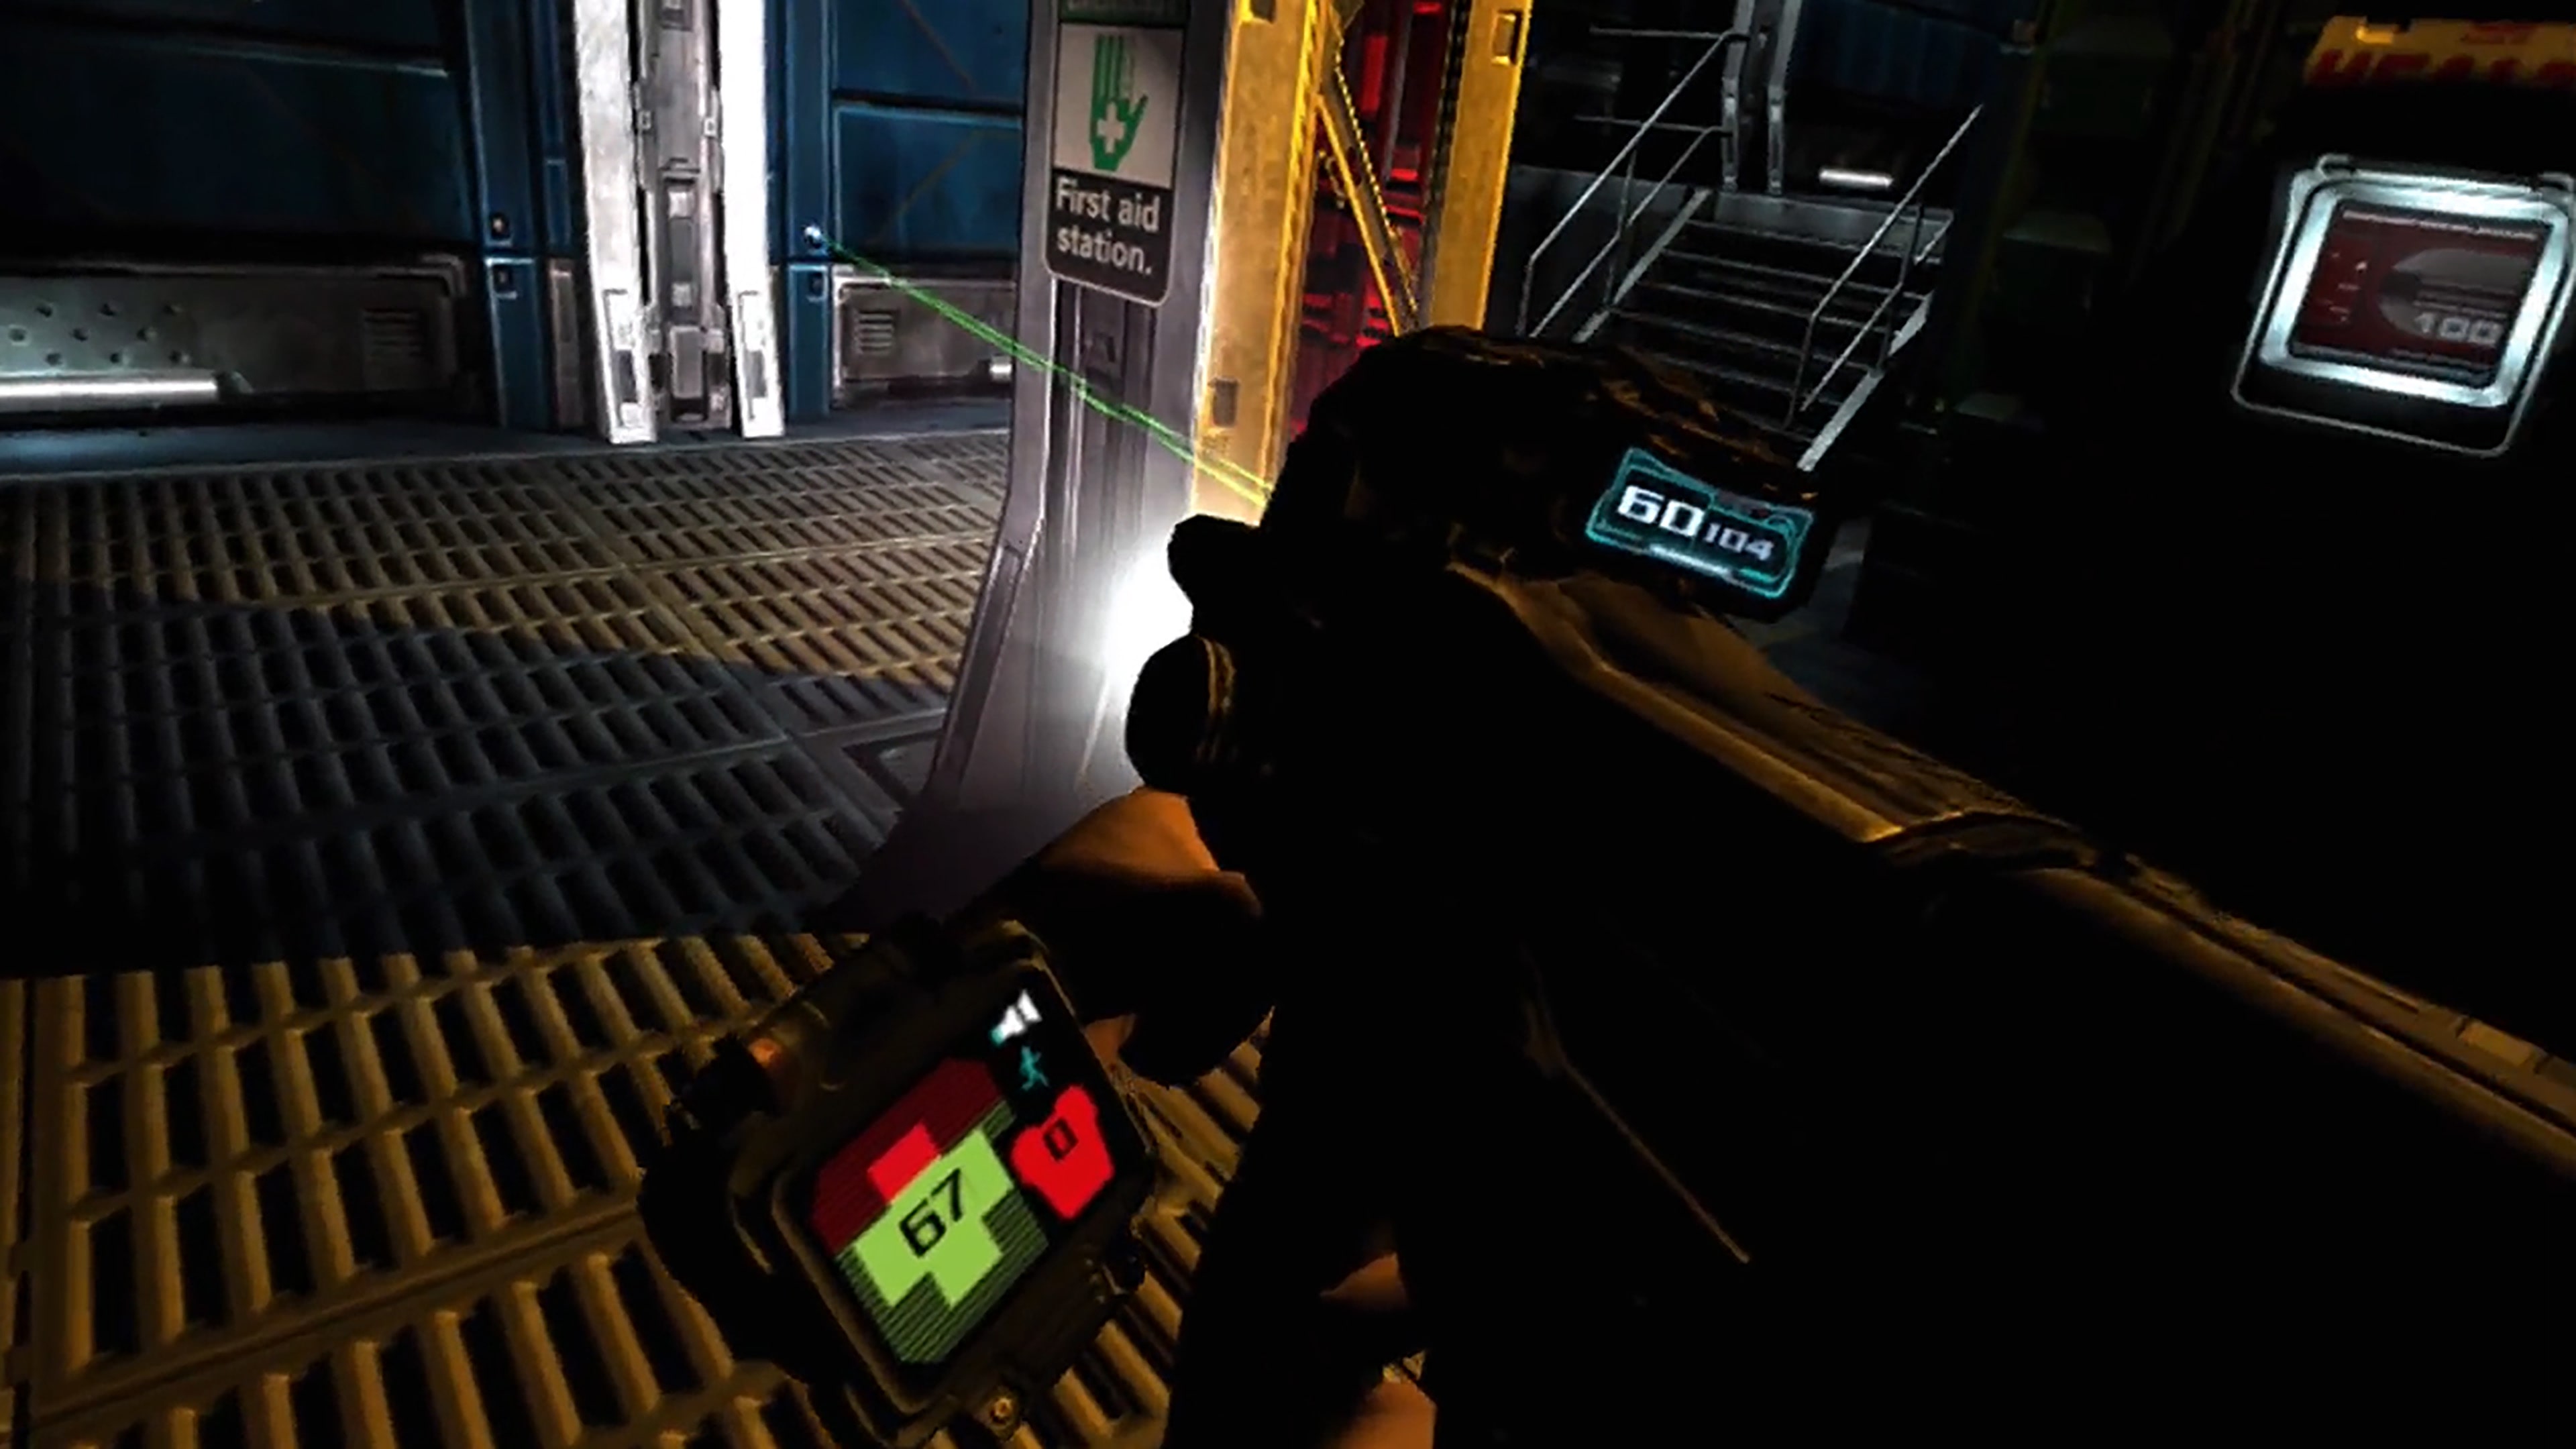 Doom 3 VR Edition [ PS VR Game ] (PS4 / PSVR) NEW